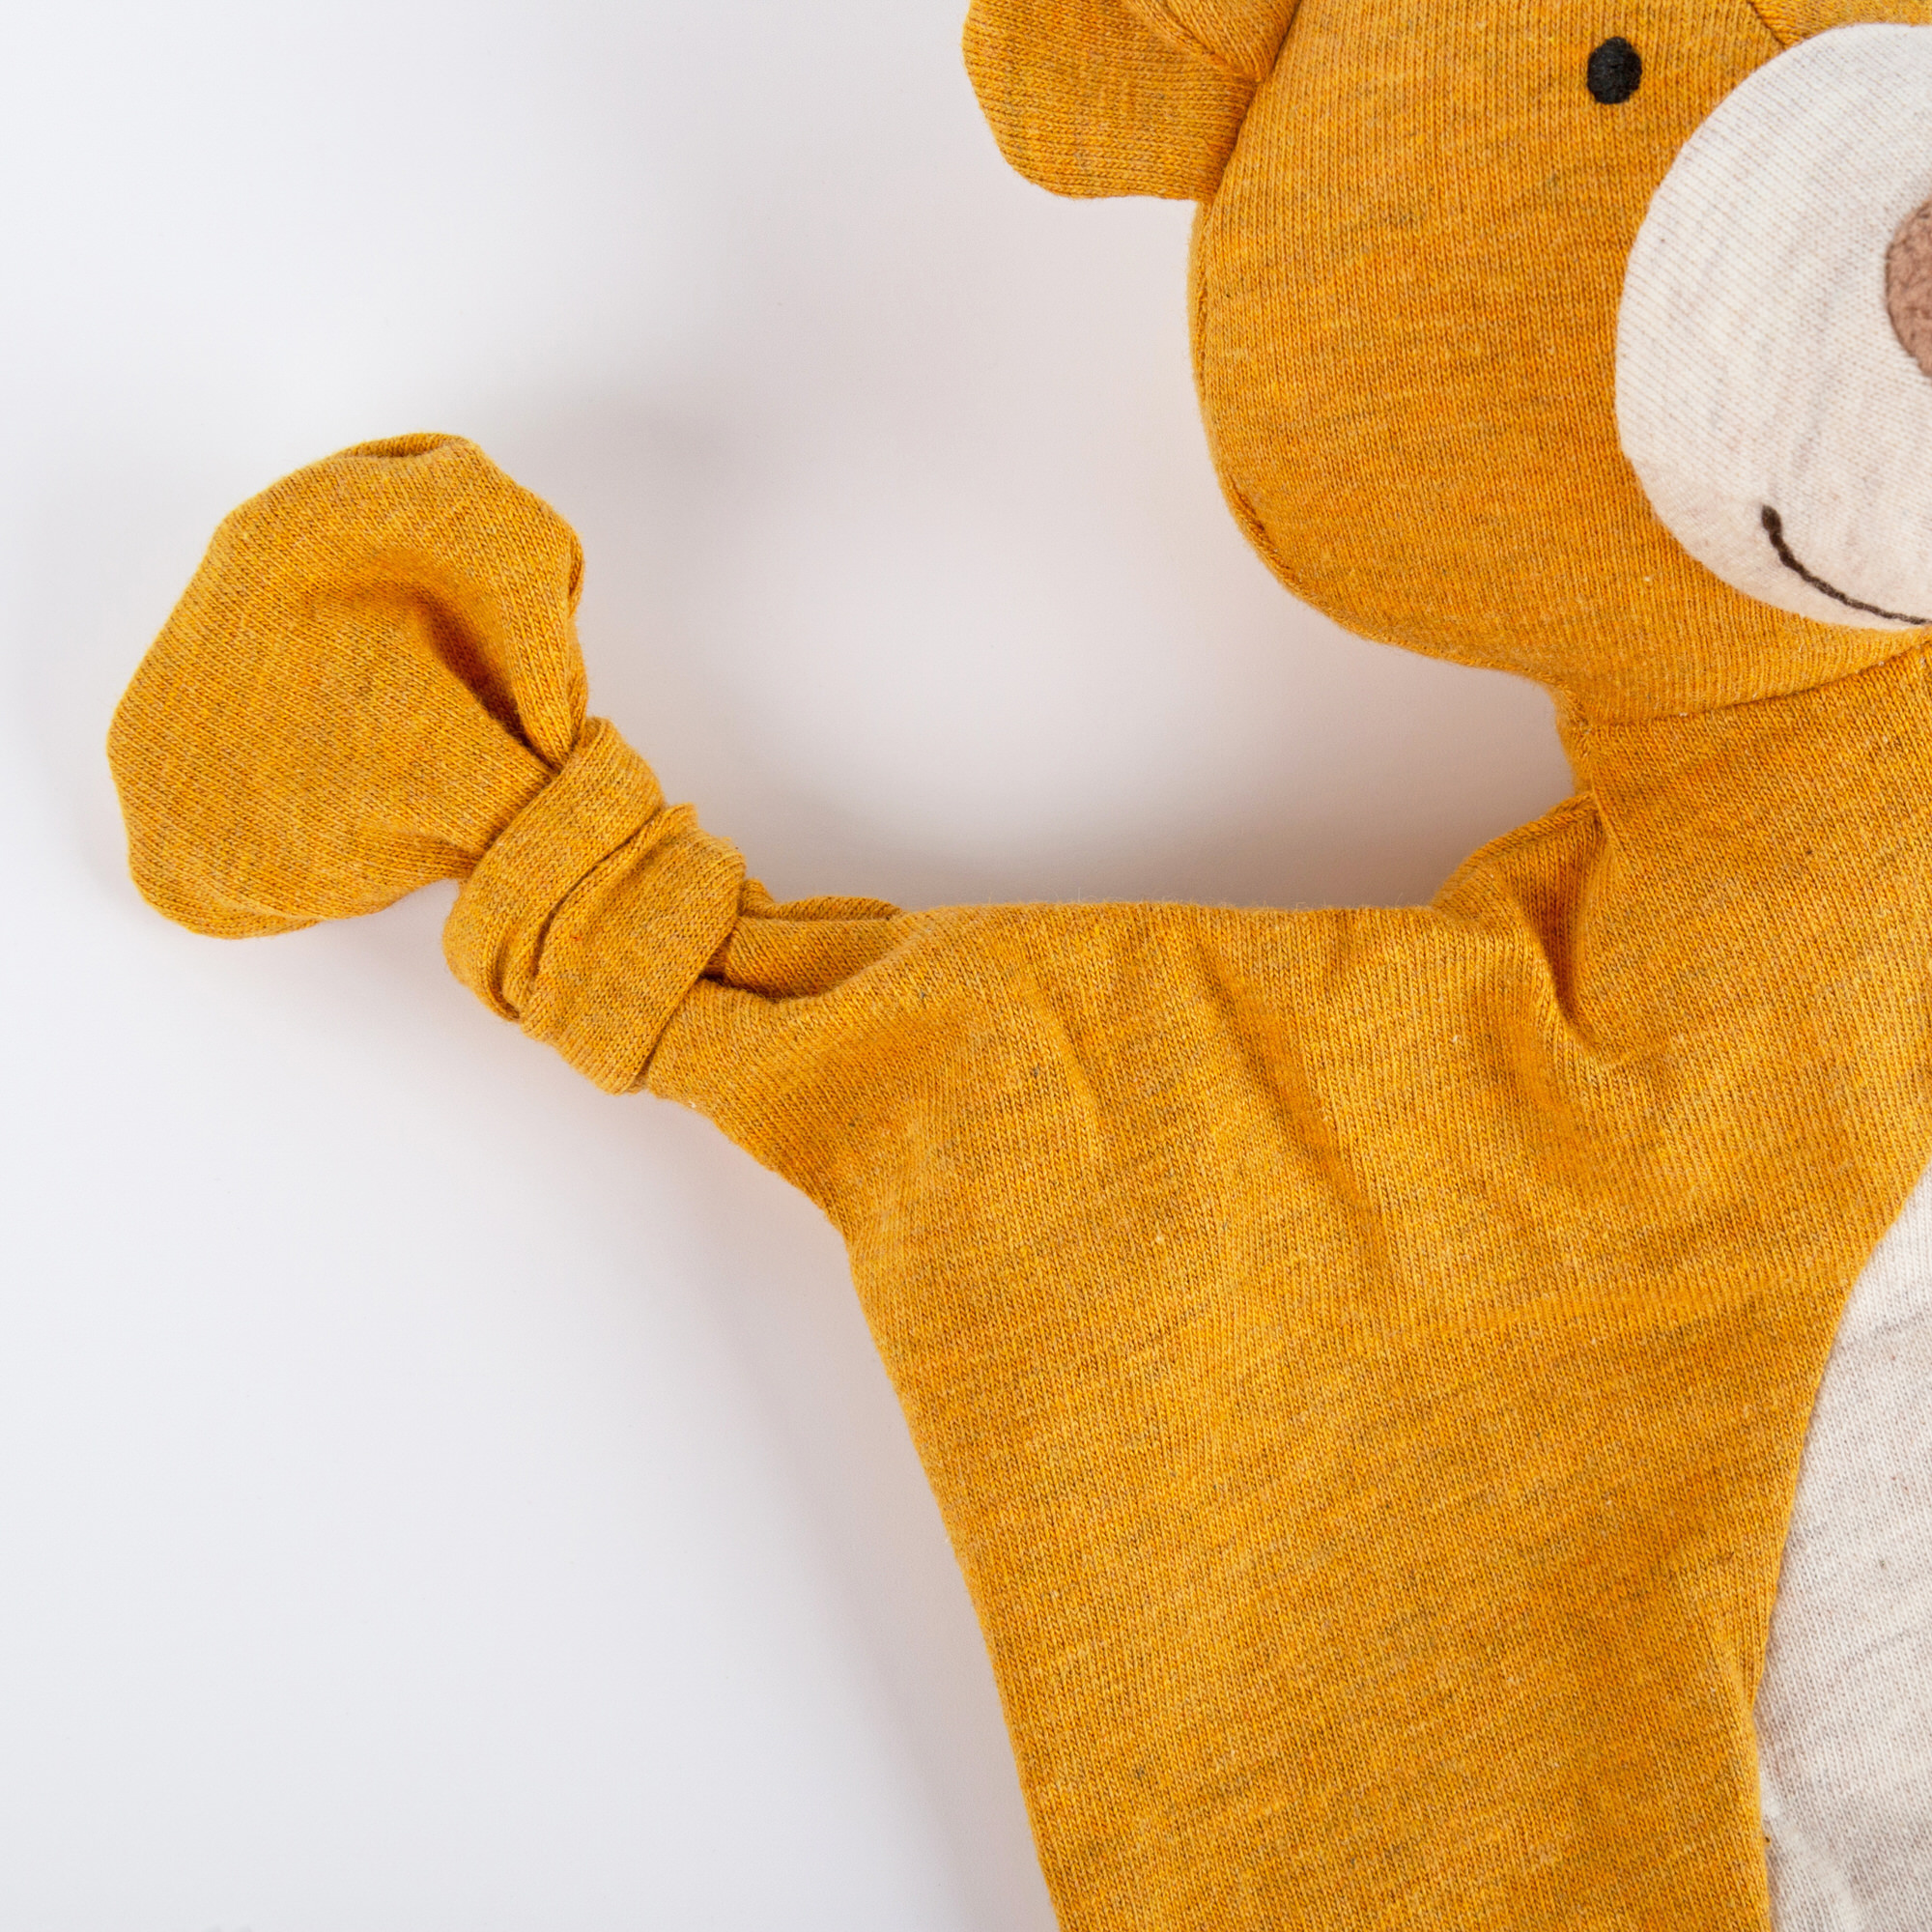 Baby comforter bear, yellow marl